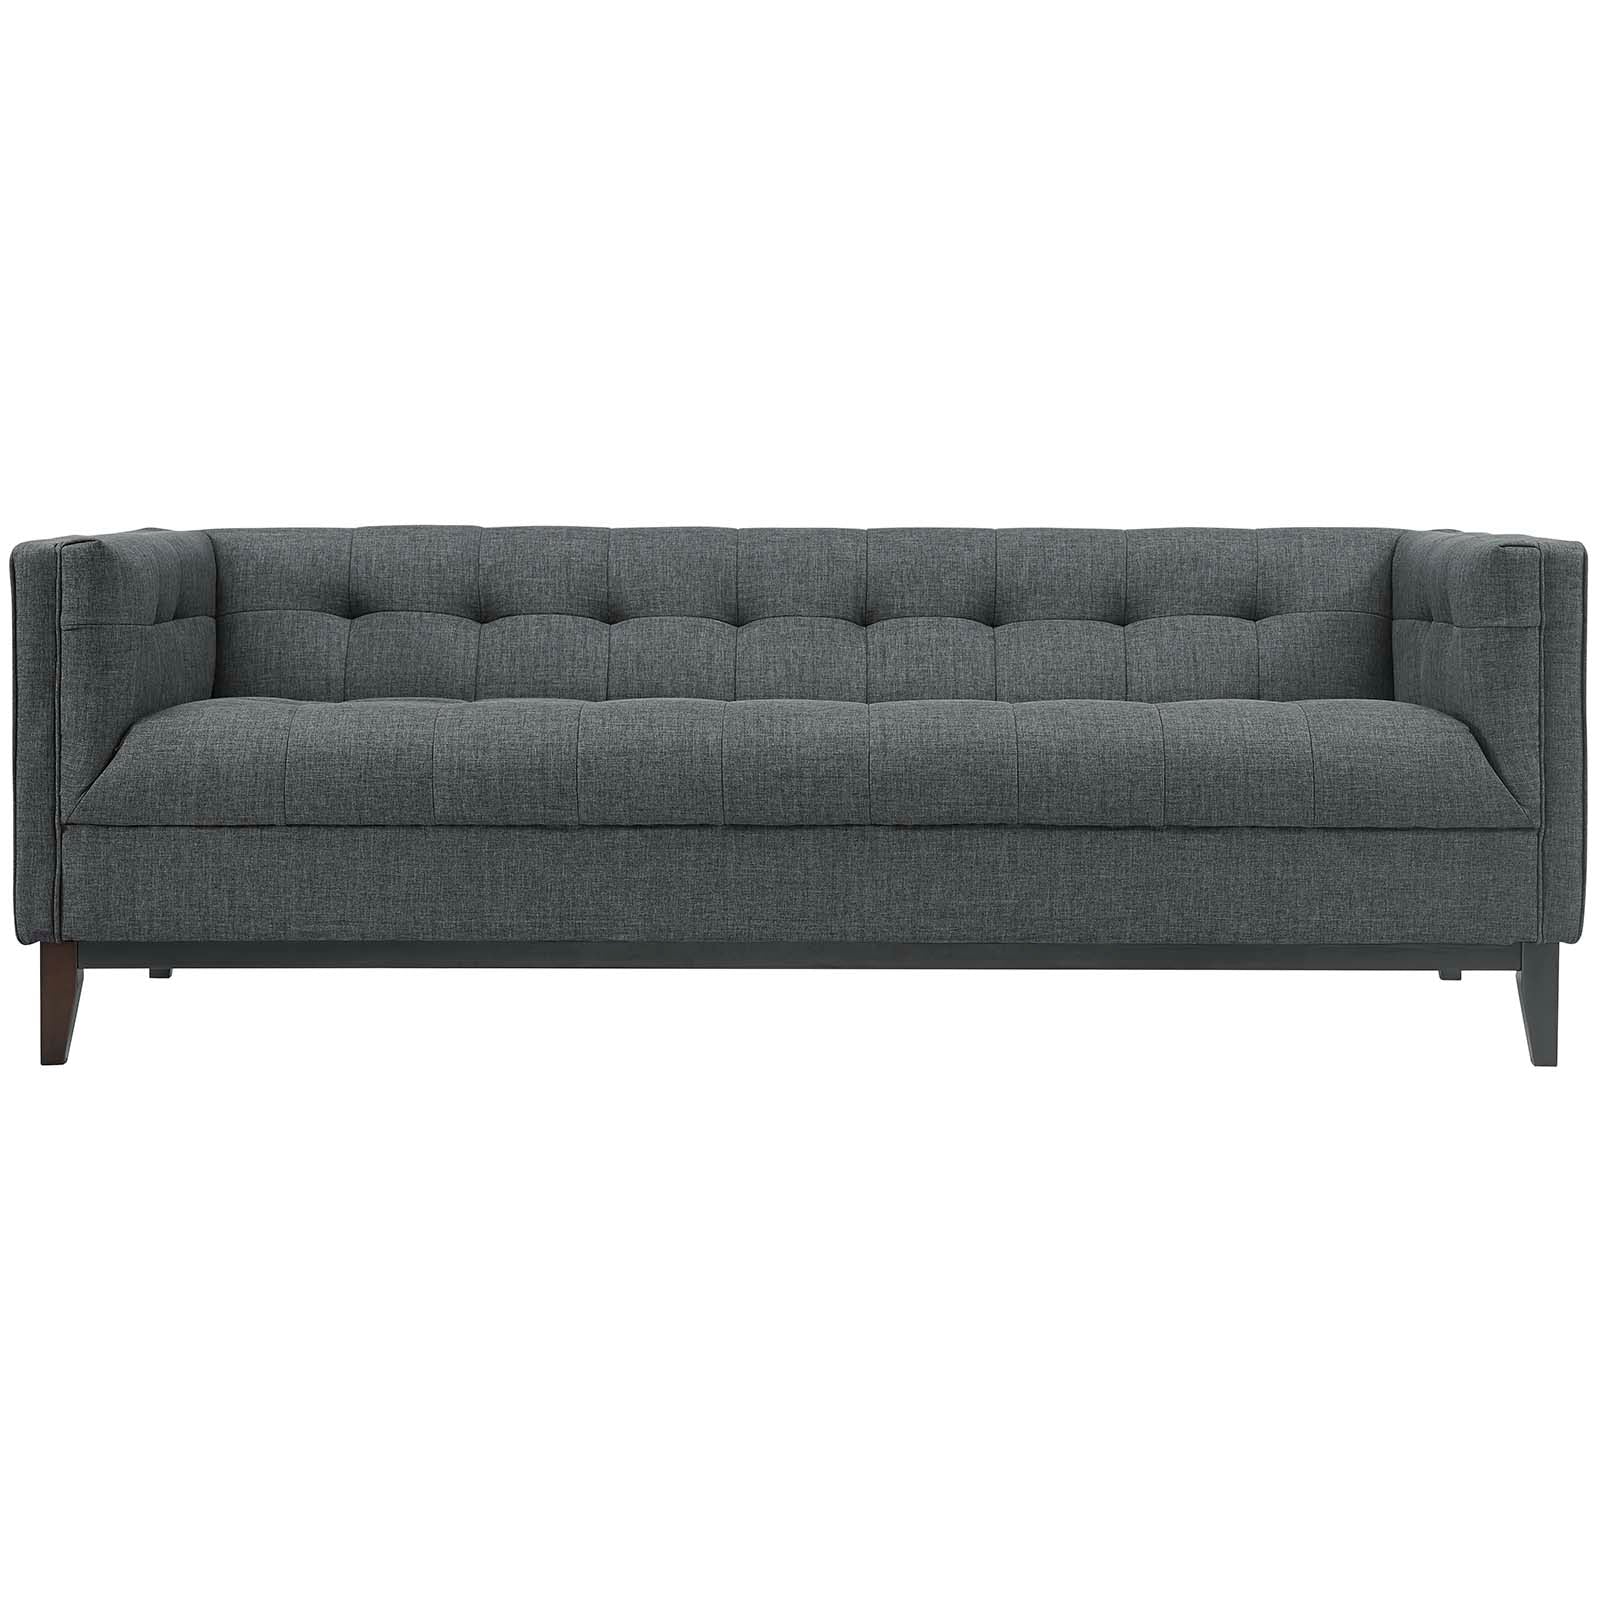 Serve Upholstered Fabric Sofa - East Shore Modern Home Furnishings